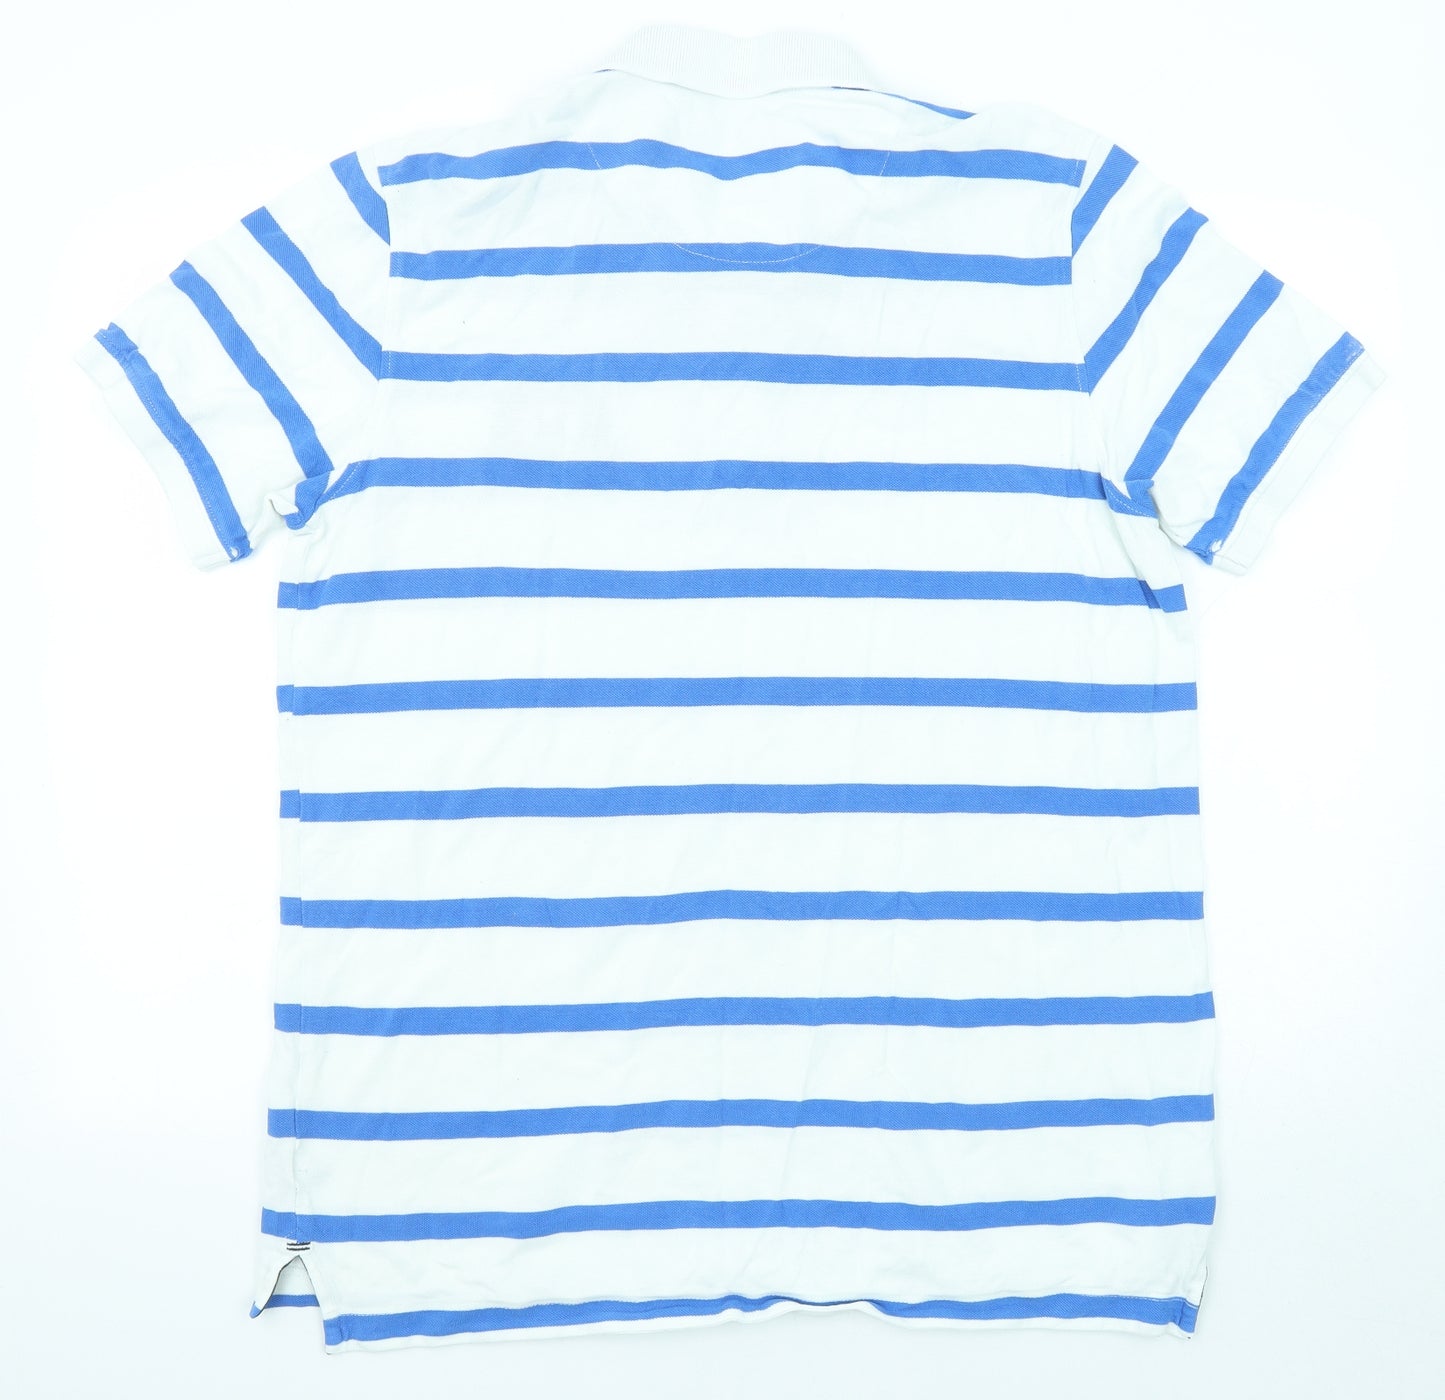 Crew Clothing Mens Blue Striped Cotton Polo Size XL Collared Button